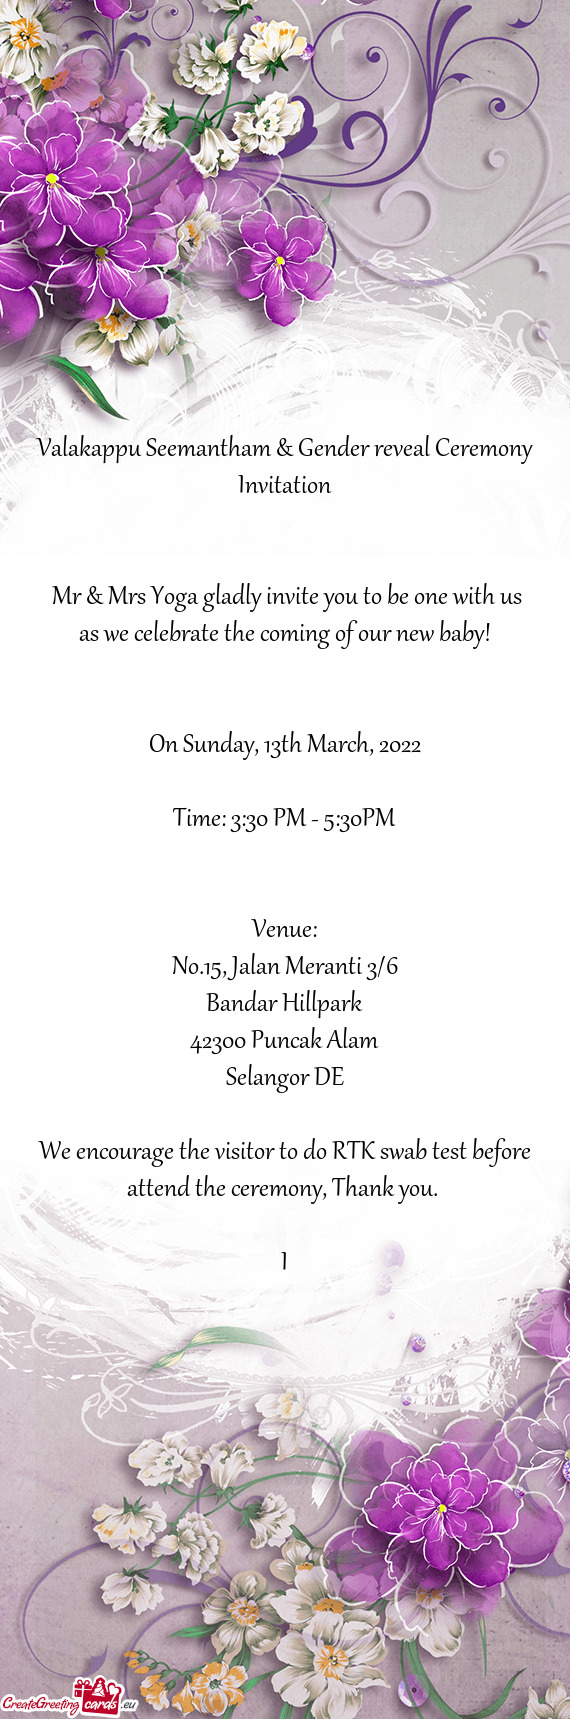 Valakappu Seemantham & Gender reveal Ceremony Invitation